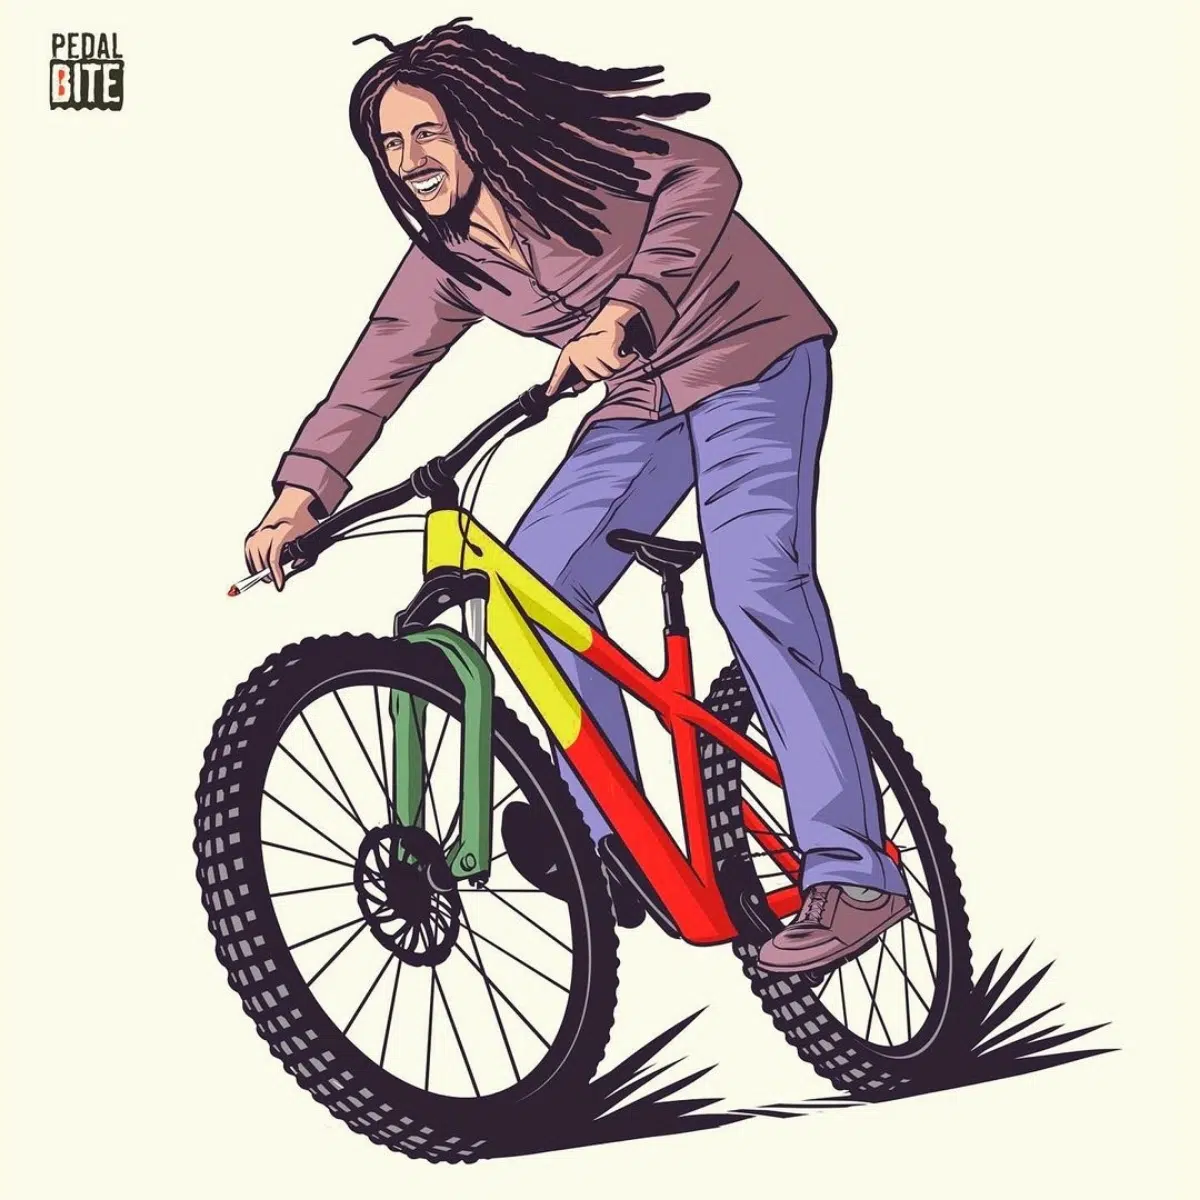 DOWNLOAD: Bob Marley – “Waiting In Vain” Mp3